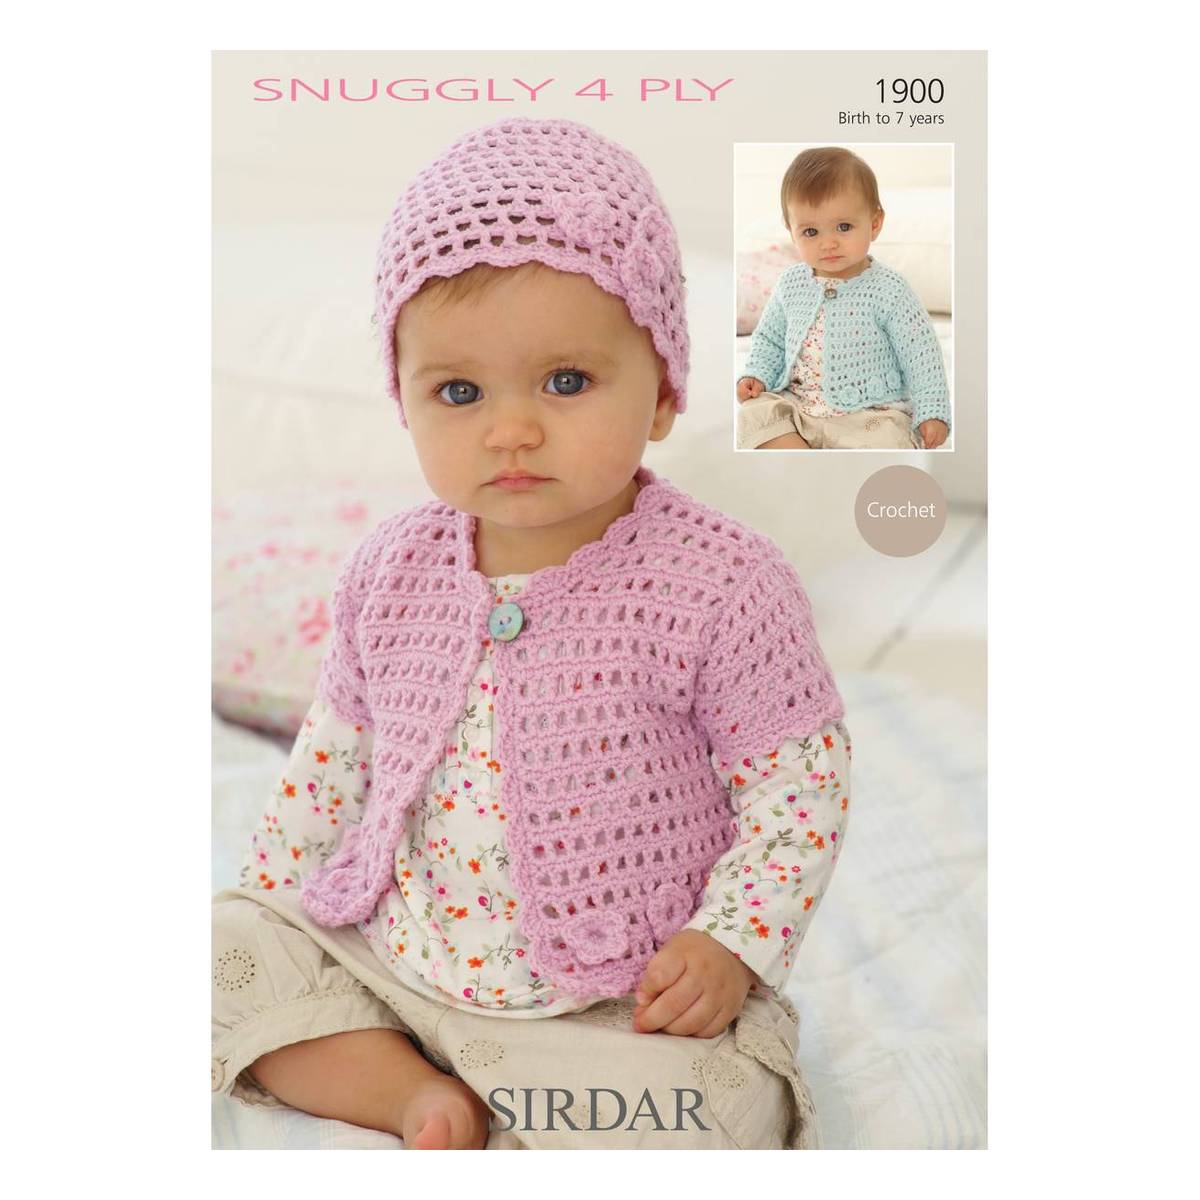 Sirdar Snuggly 4 Ply Cardigans and Hat Digital Pattern 1900 | Hobbycraft